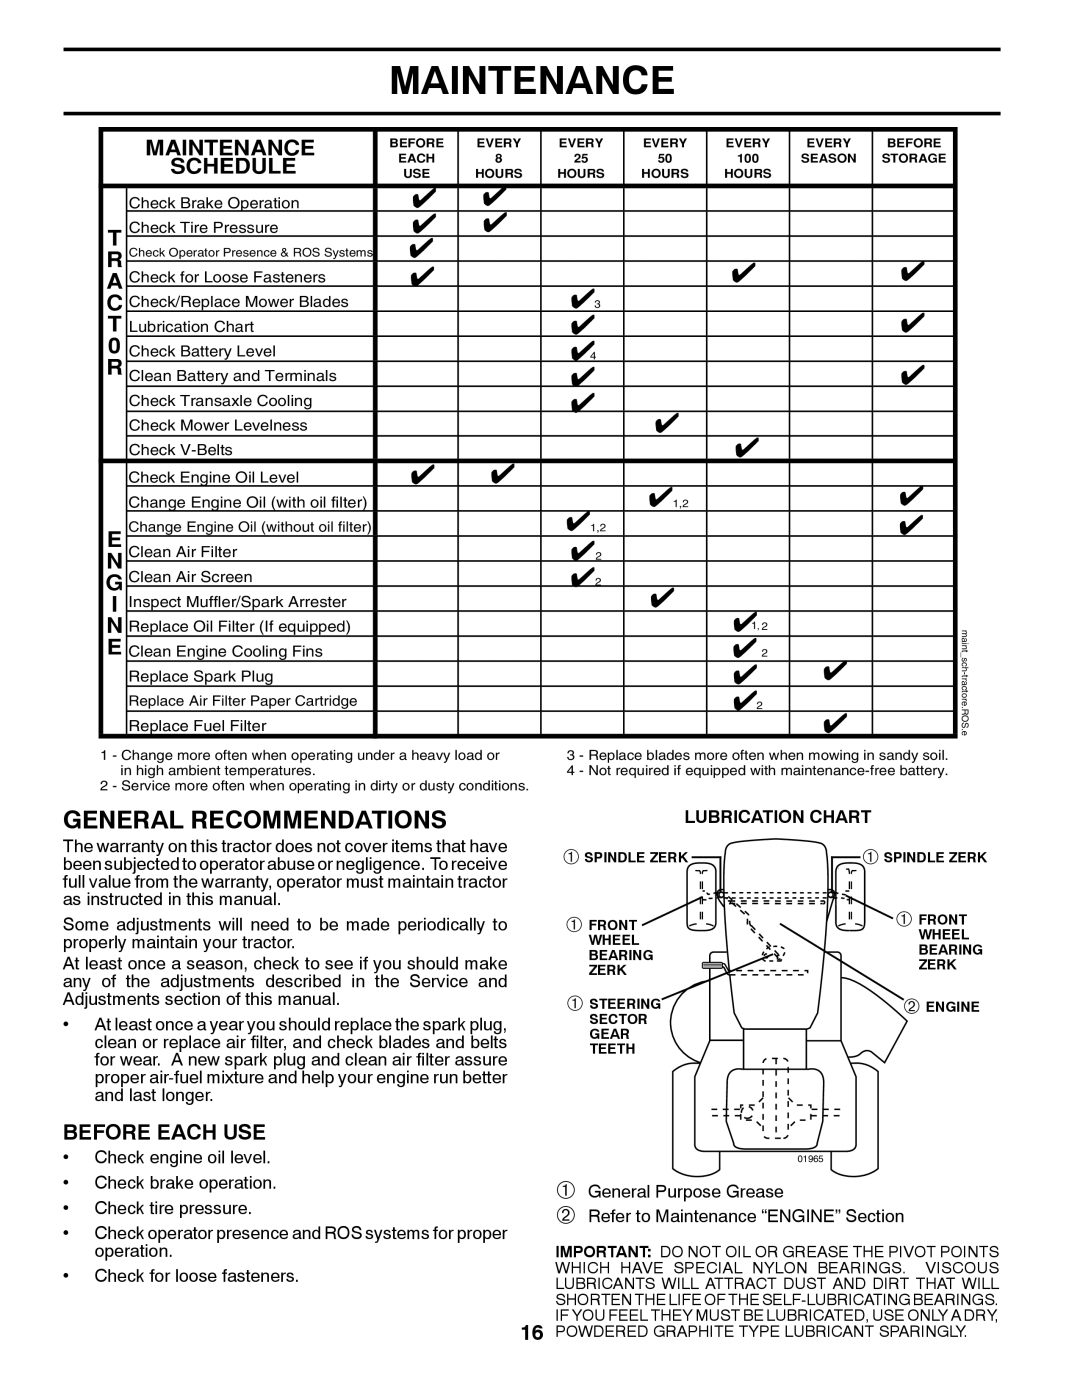 Husqvarna 531 30 96-85, 96045001500, LGT2554 owner manual Maintenance, Lubrication Chart 